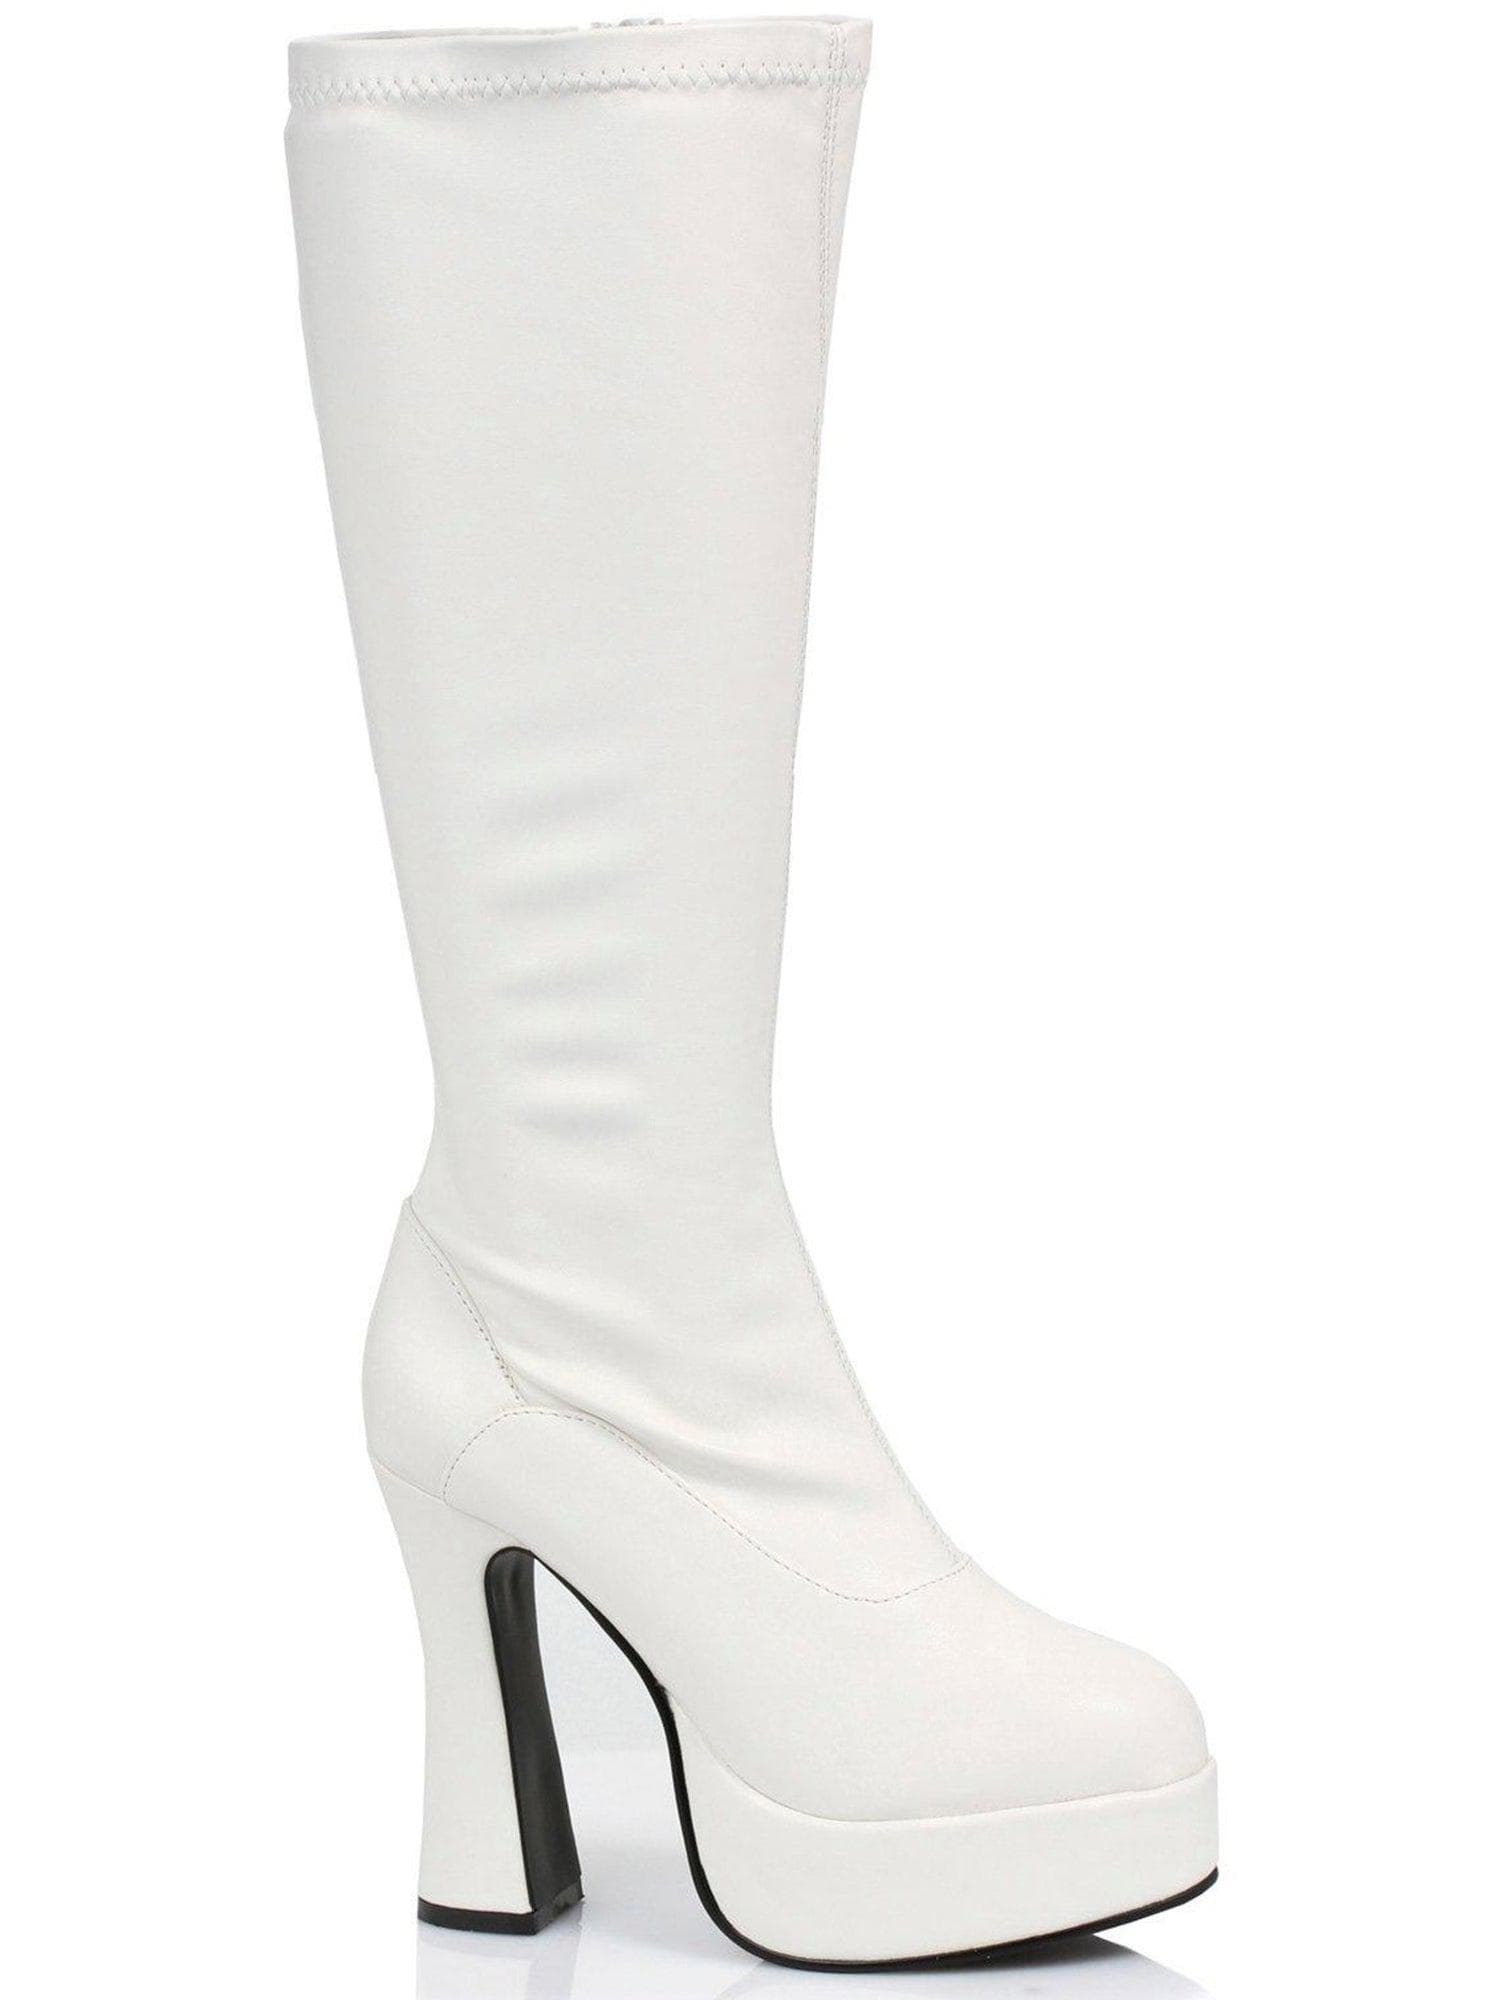 Adult Sexy White Platform Heeled Boots - costumes.com